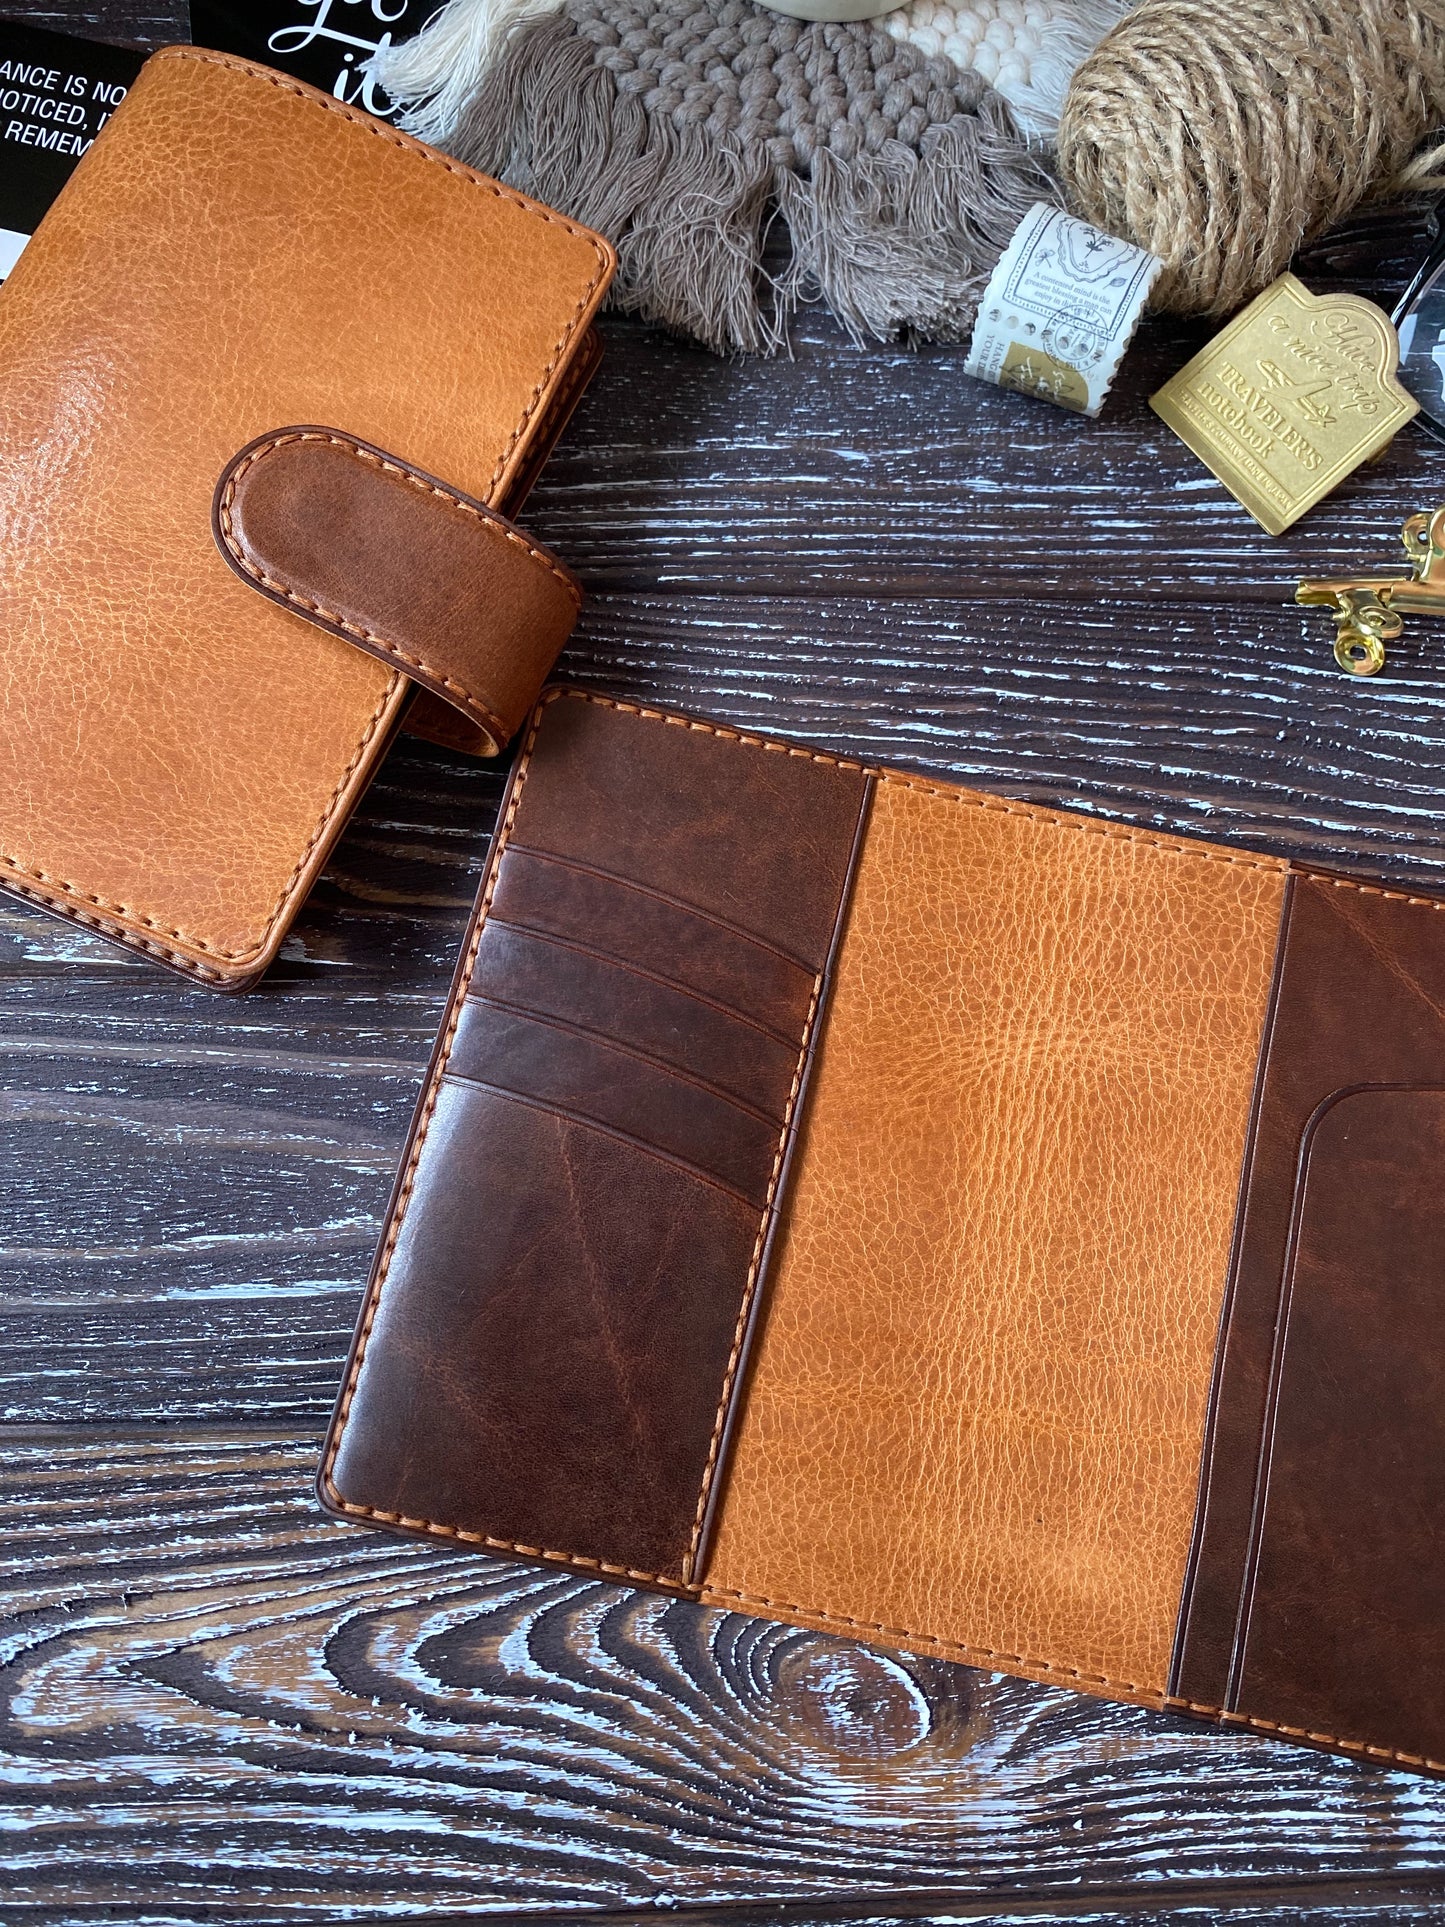 Moleskine Pocket TN leather cover